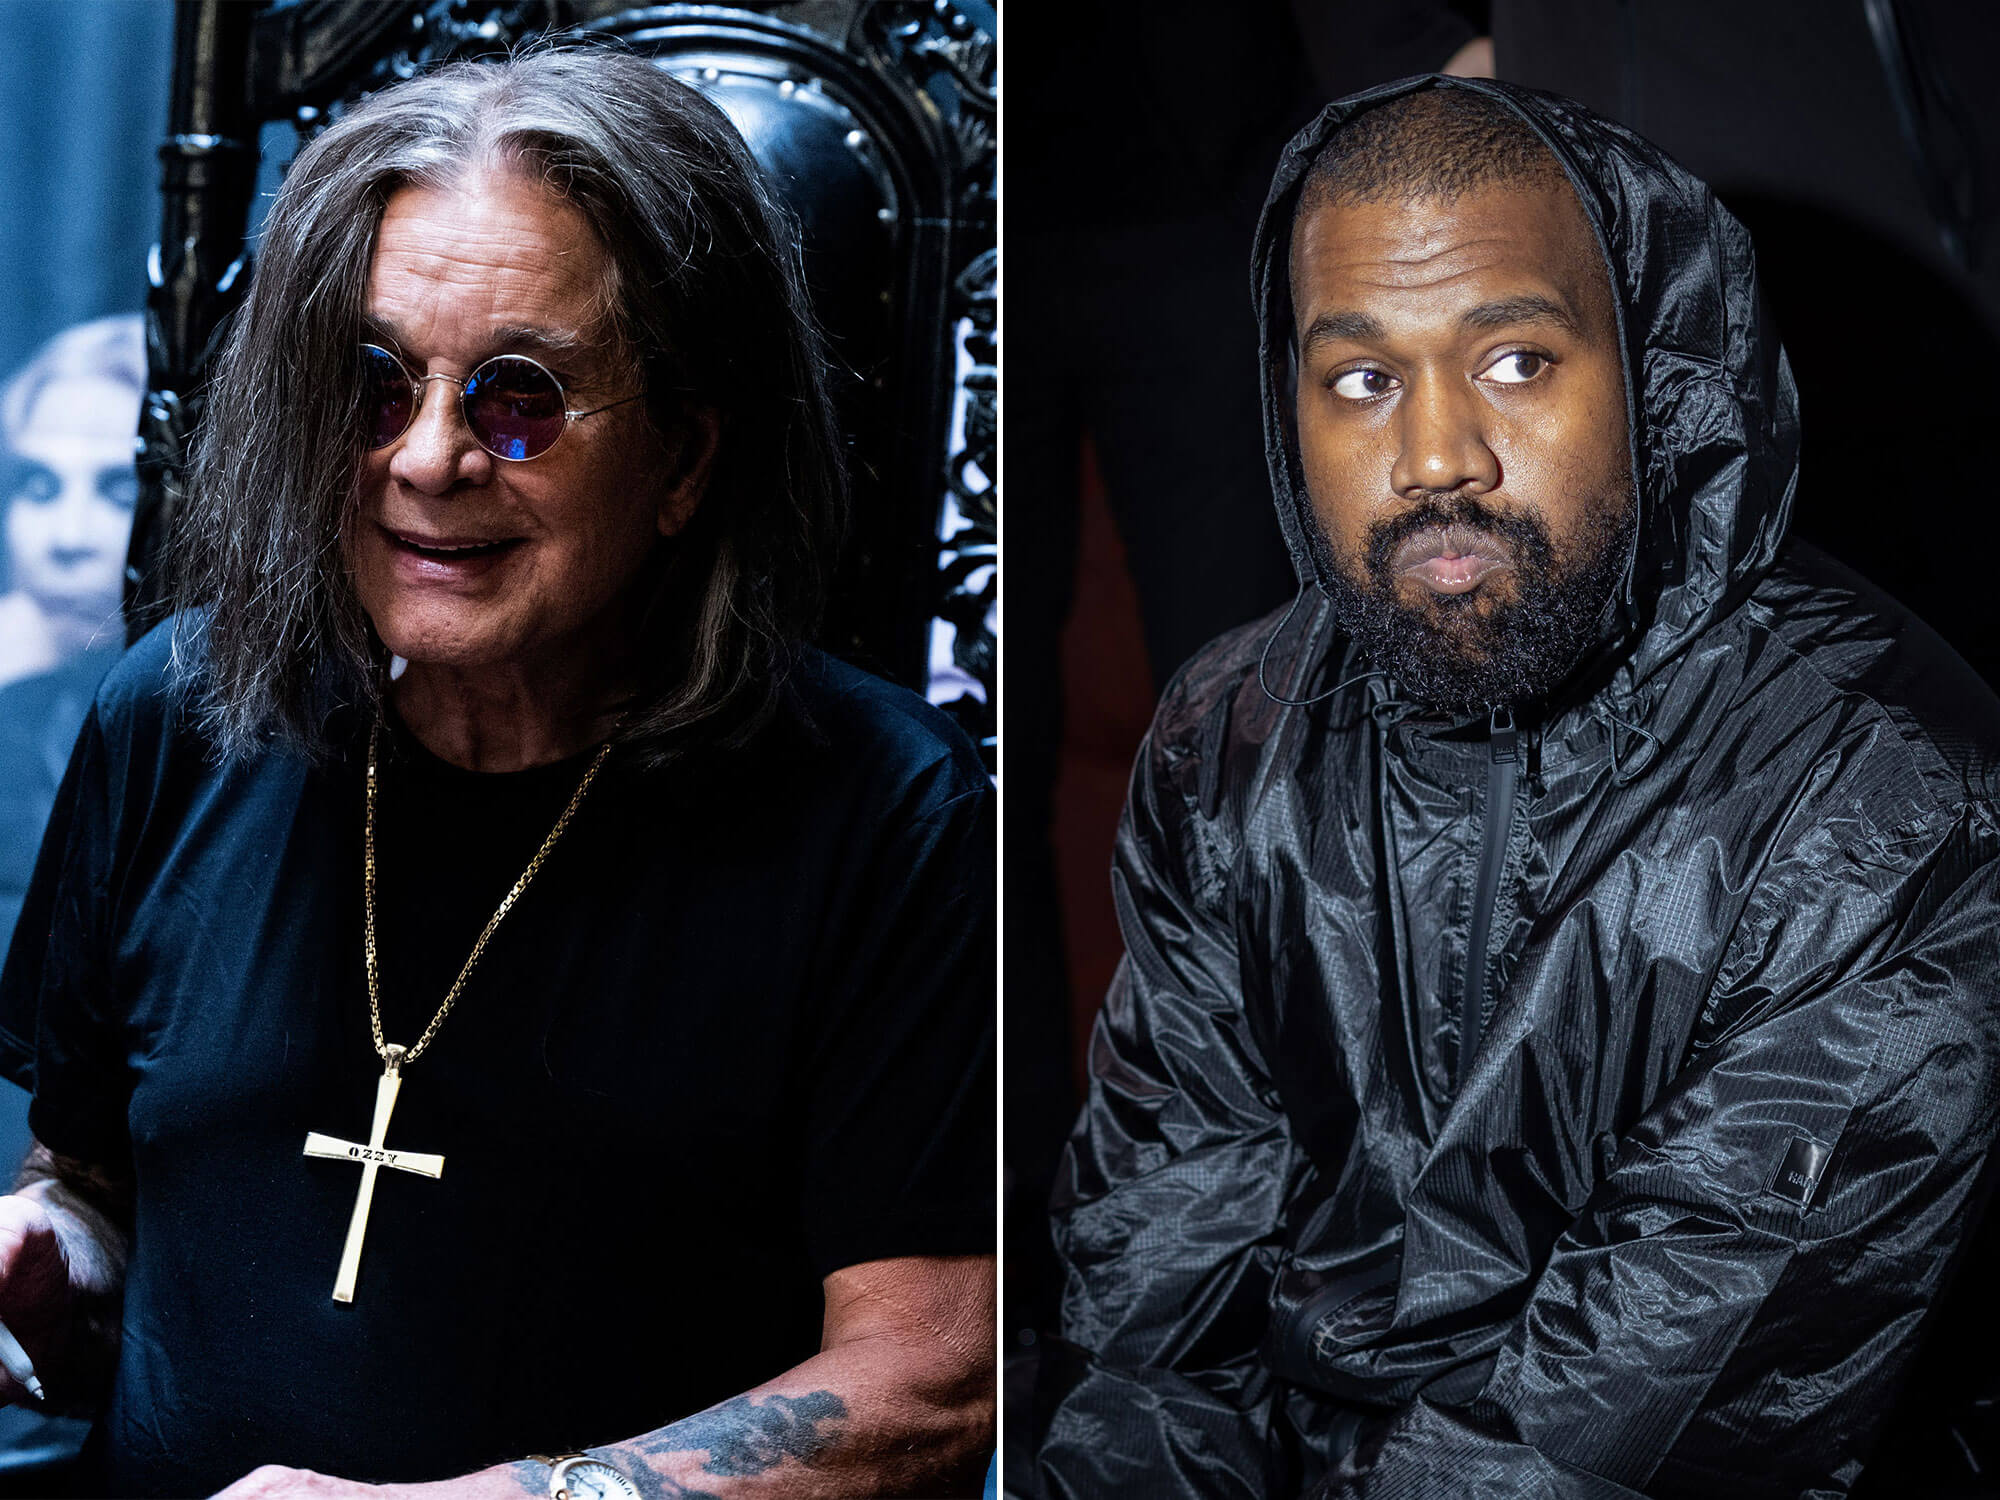 [L-R] Ozzy Osbourne and Kanye West